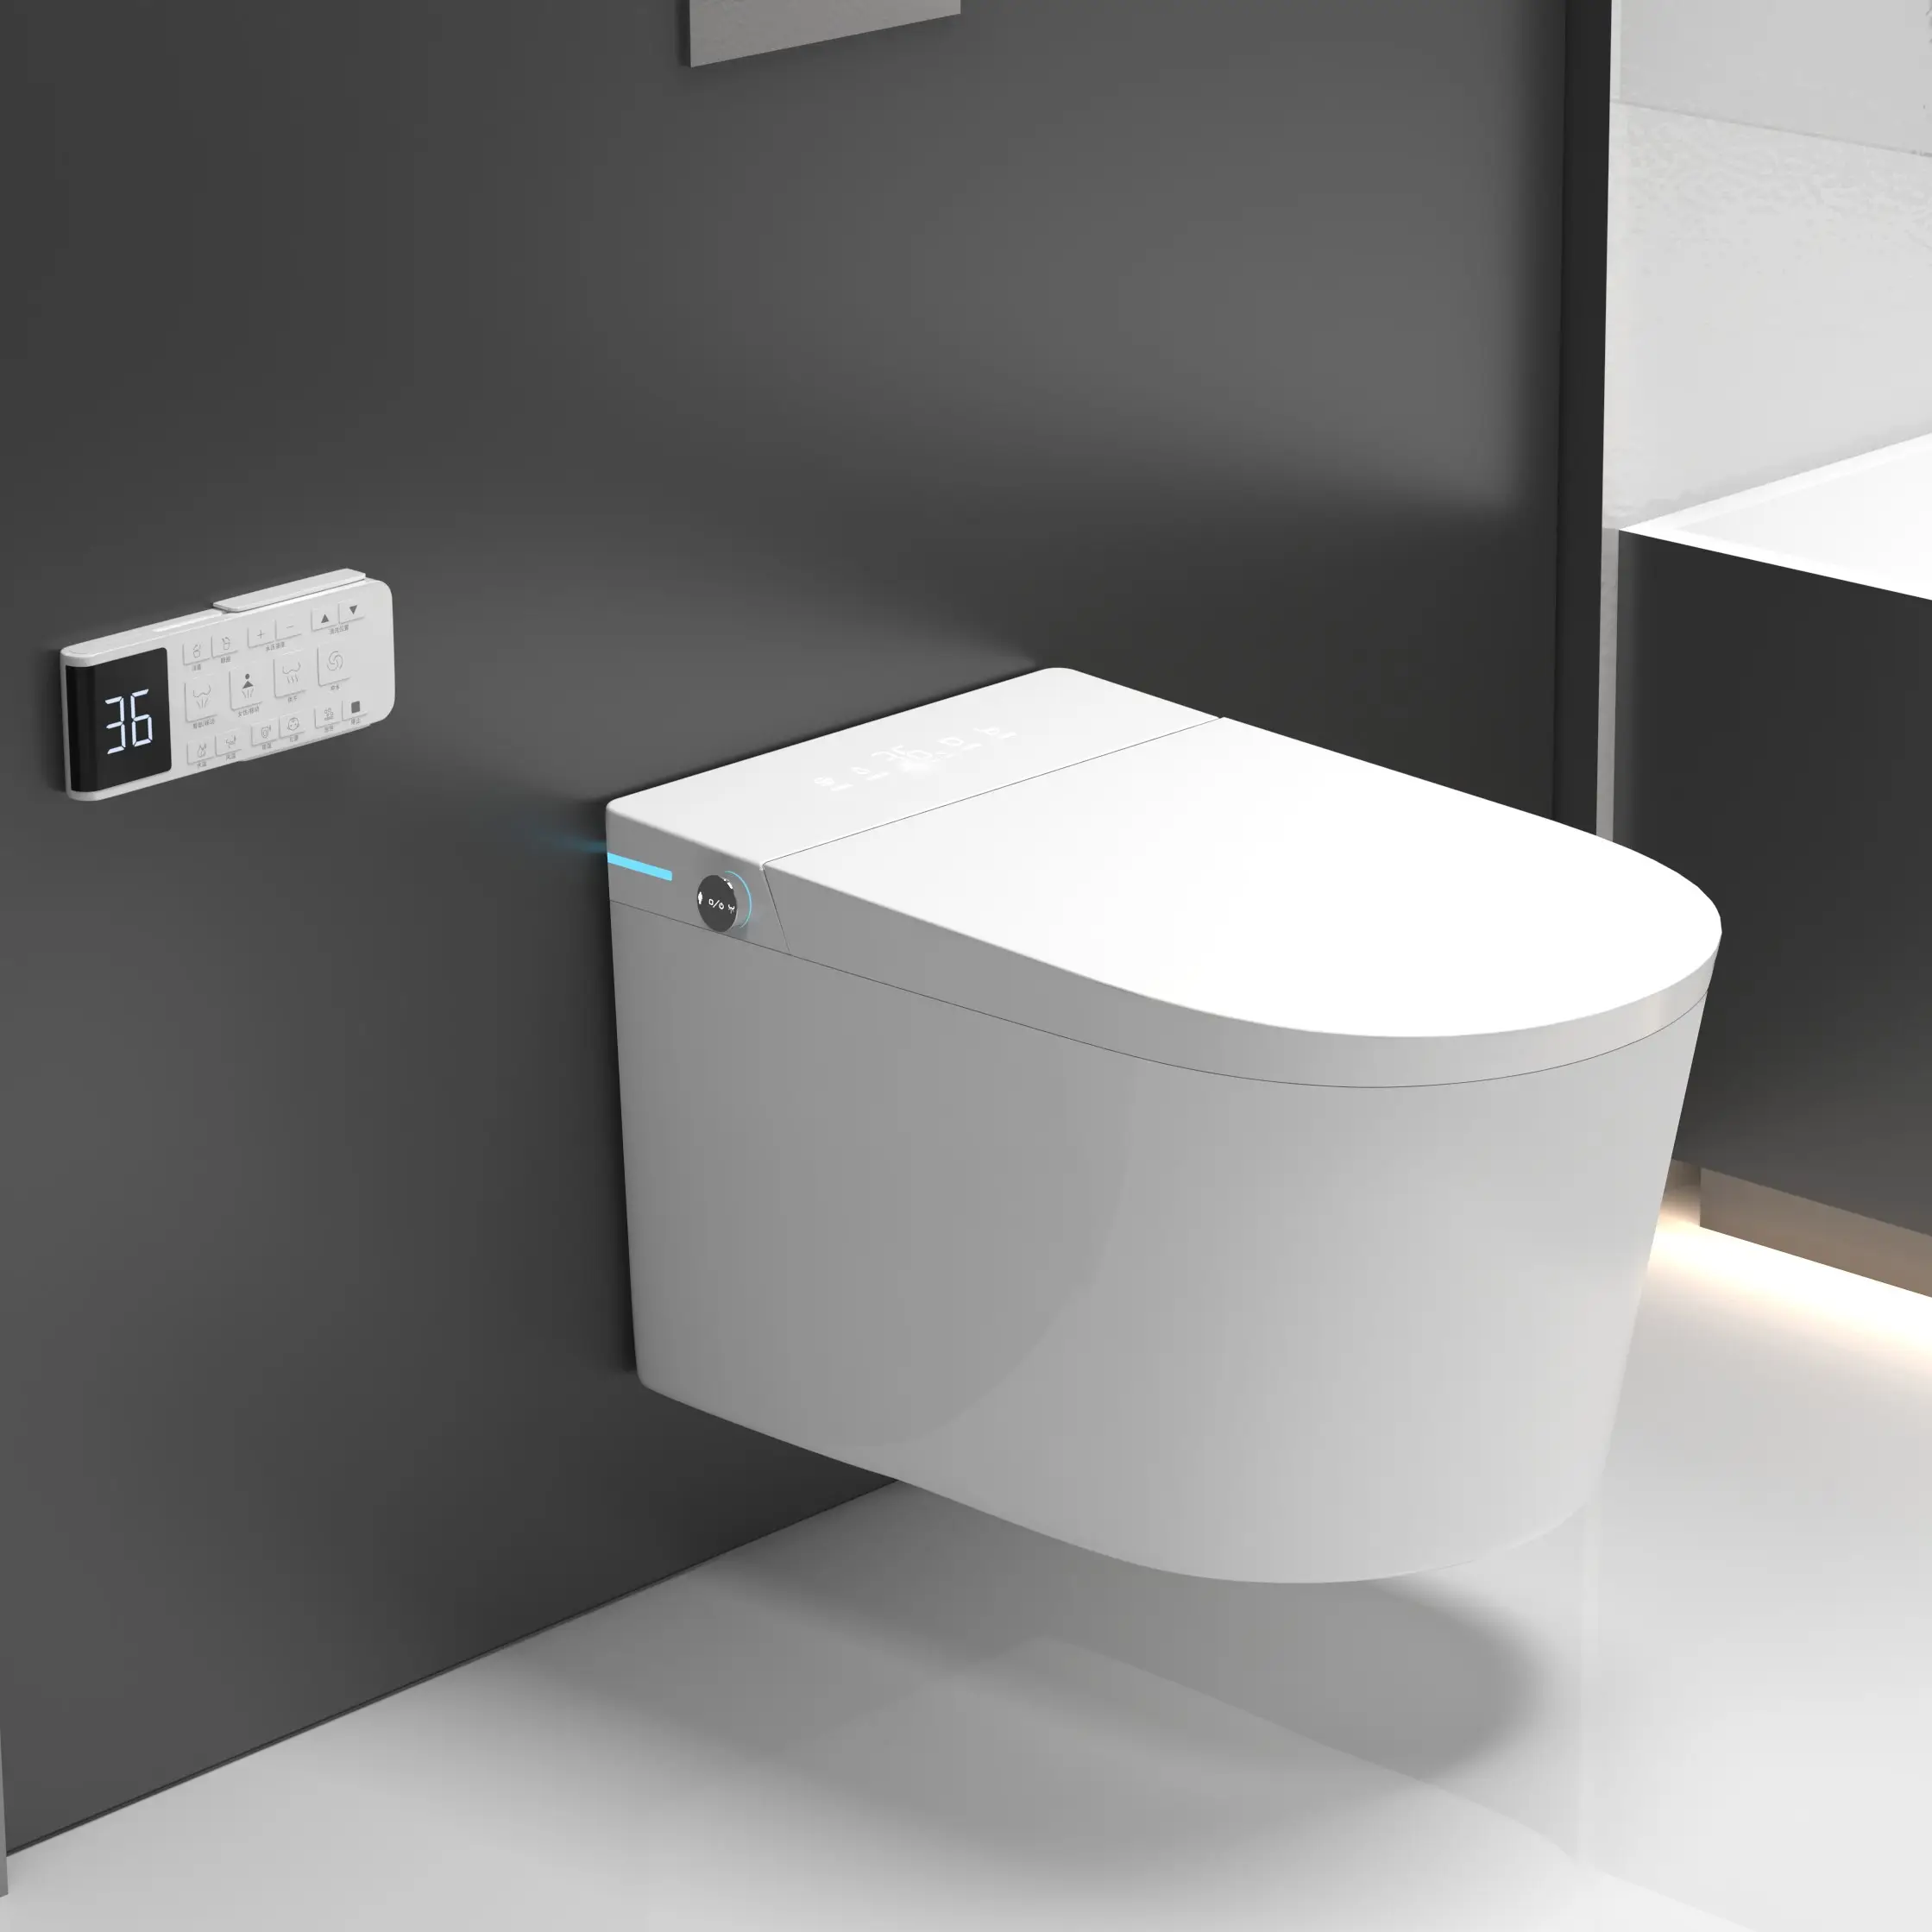 Wastafel wc porselen terpasang di dinding, mangkuk toilet pintar inodoro toilet commode kamar mandi keramik gantung otomatis